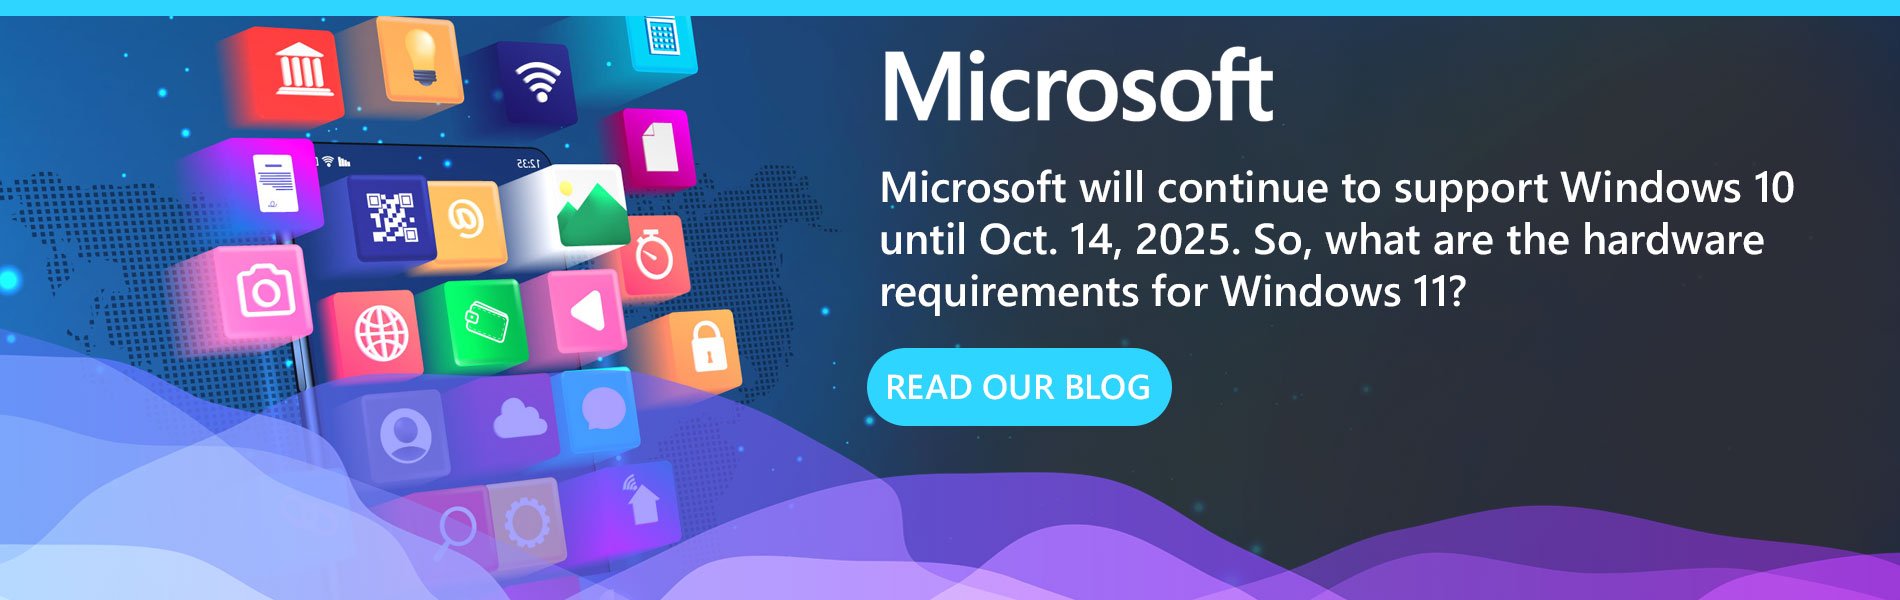 Microsoft-Windows-11-blog-banner.jpg